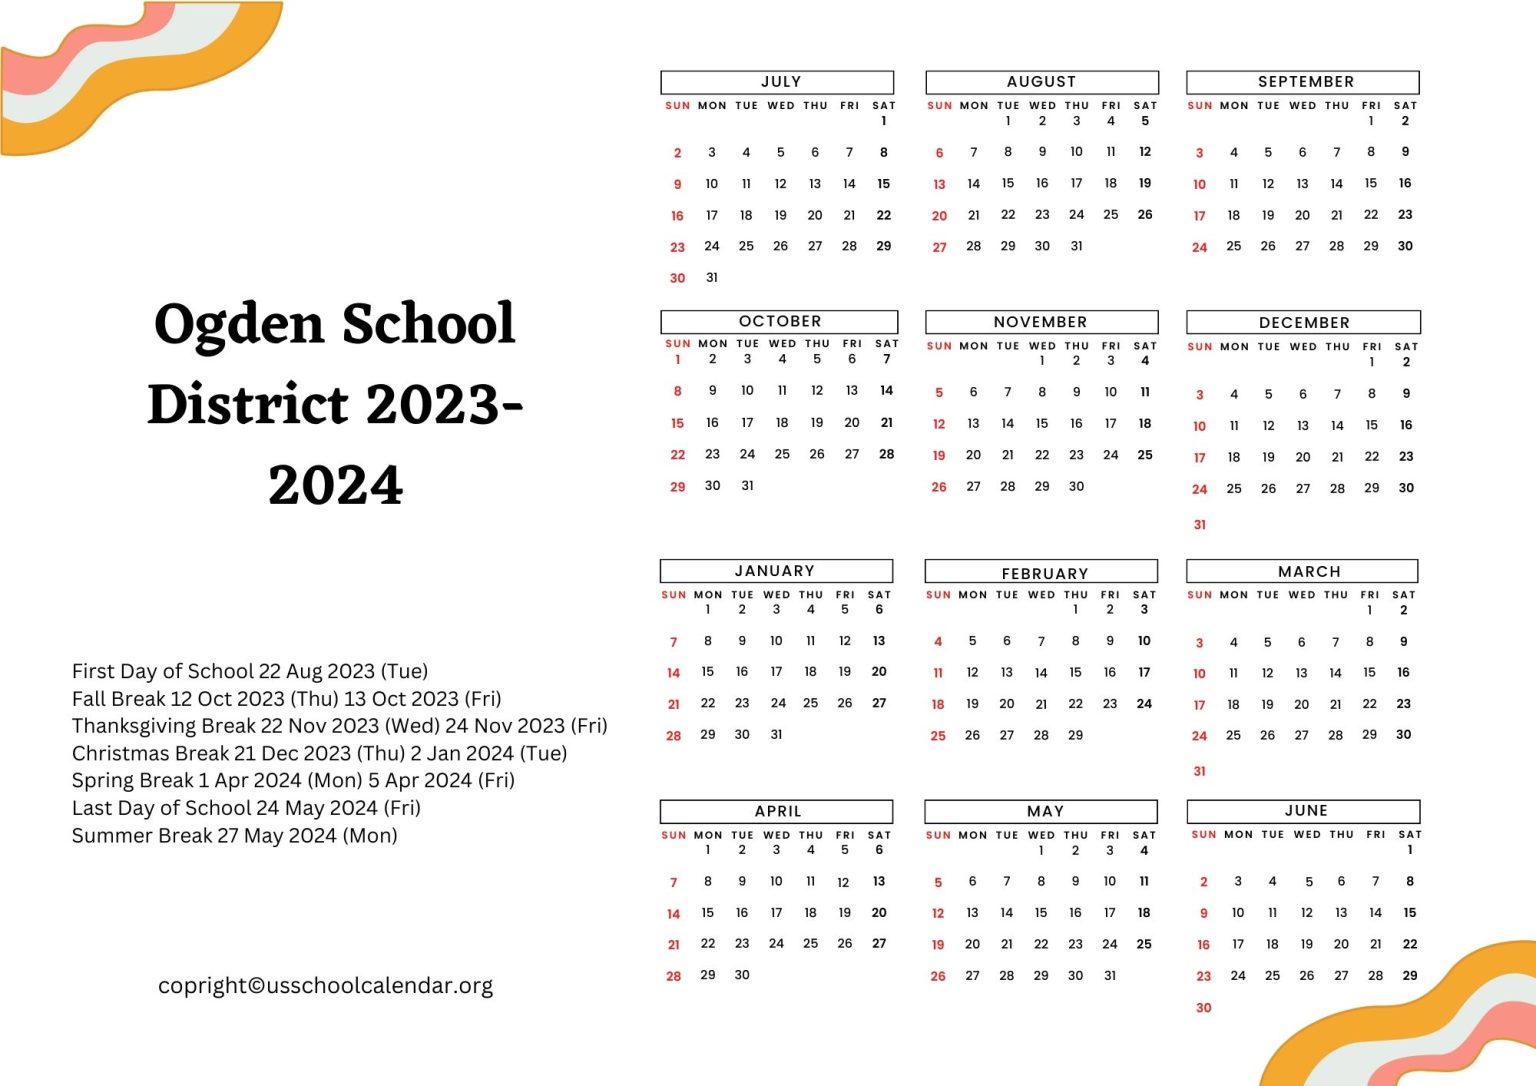 Ogden School District Calendar with Holidays 2023 2024